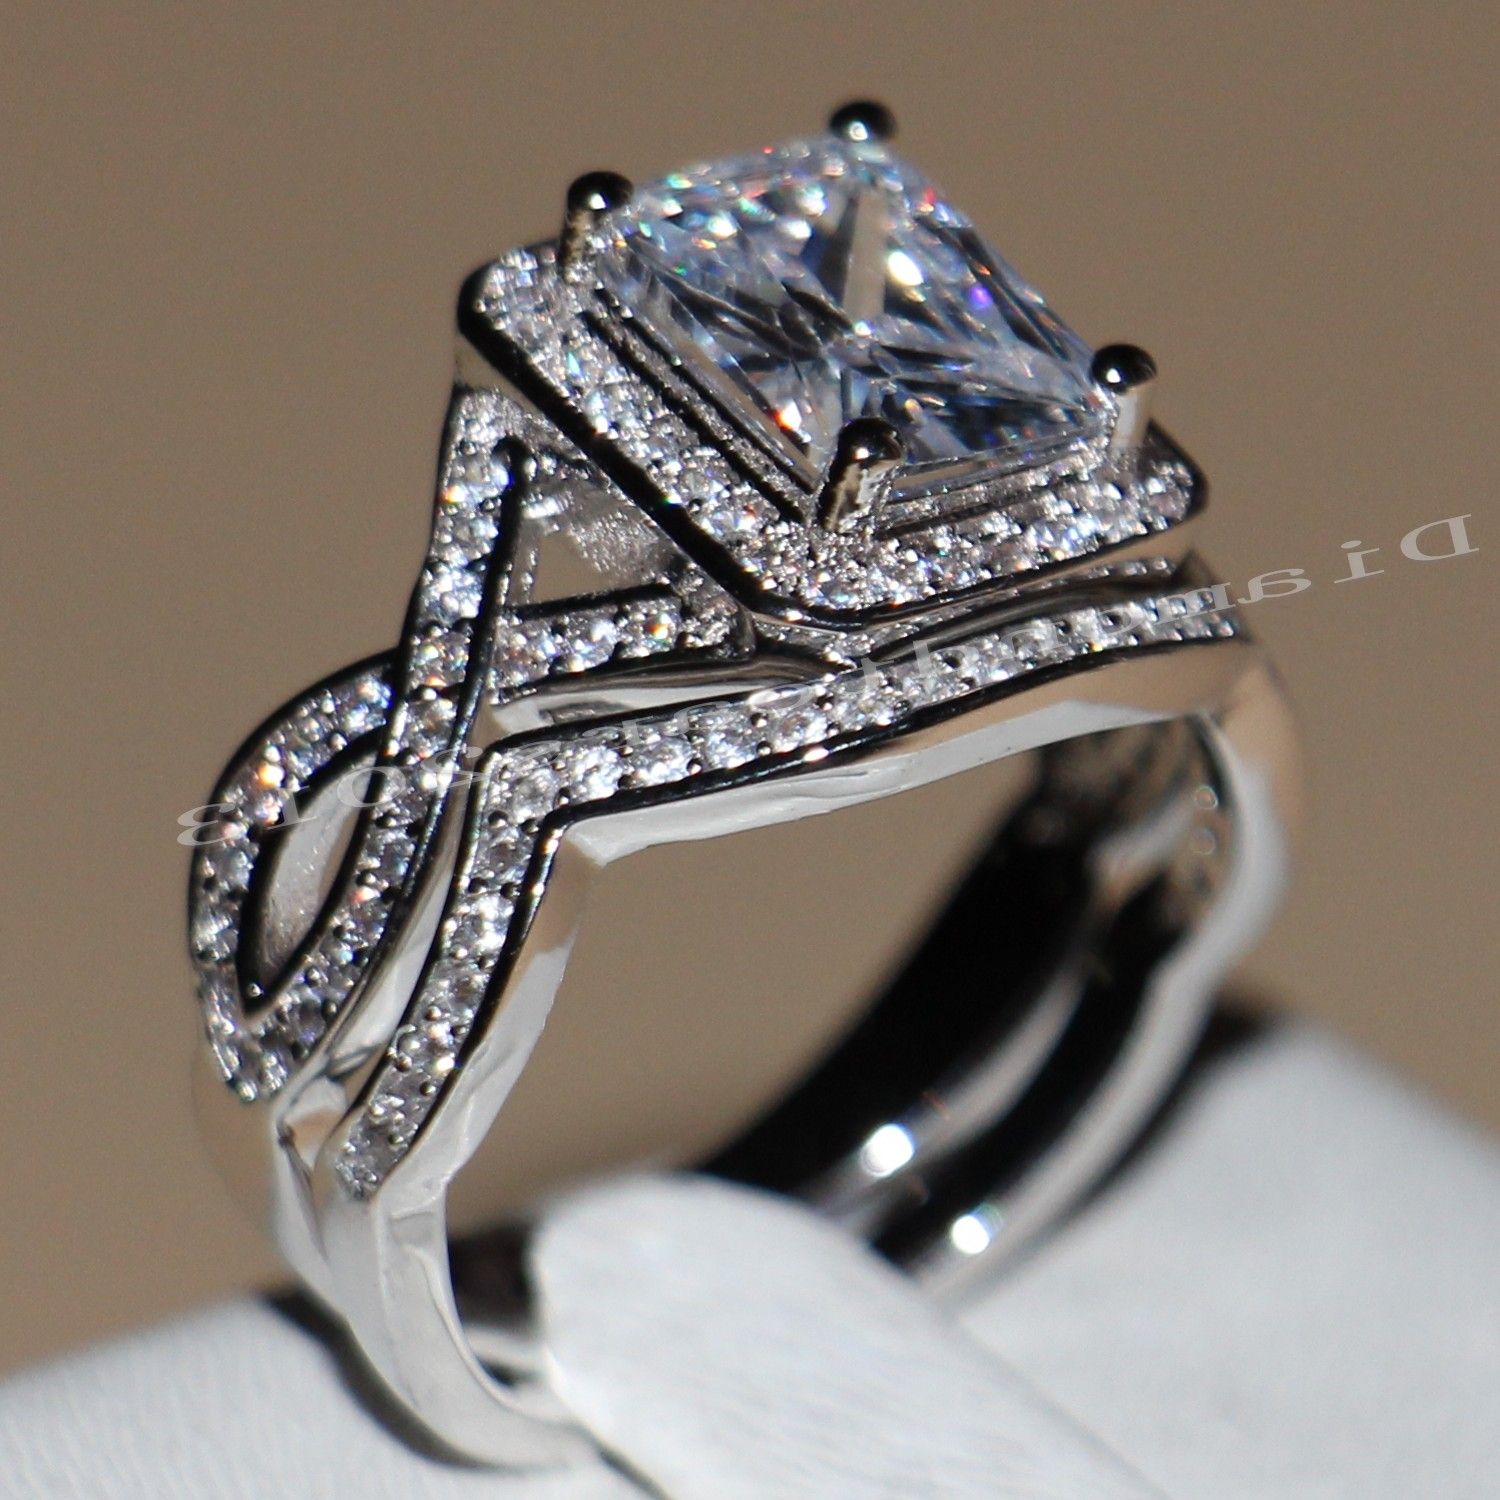 2020 4ct Princess Cut Luxury Jewelry Hot Sale 10KT White Gold Filled Topaz CZ Diamond Diamonique ...